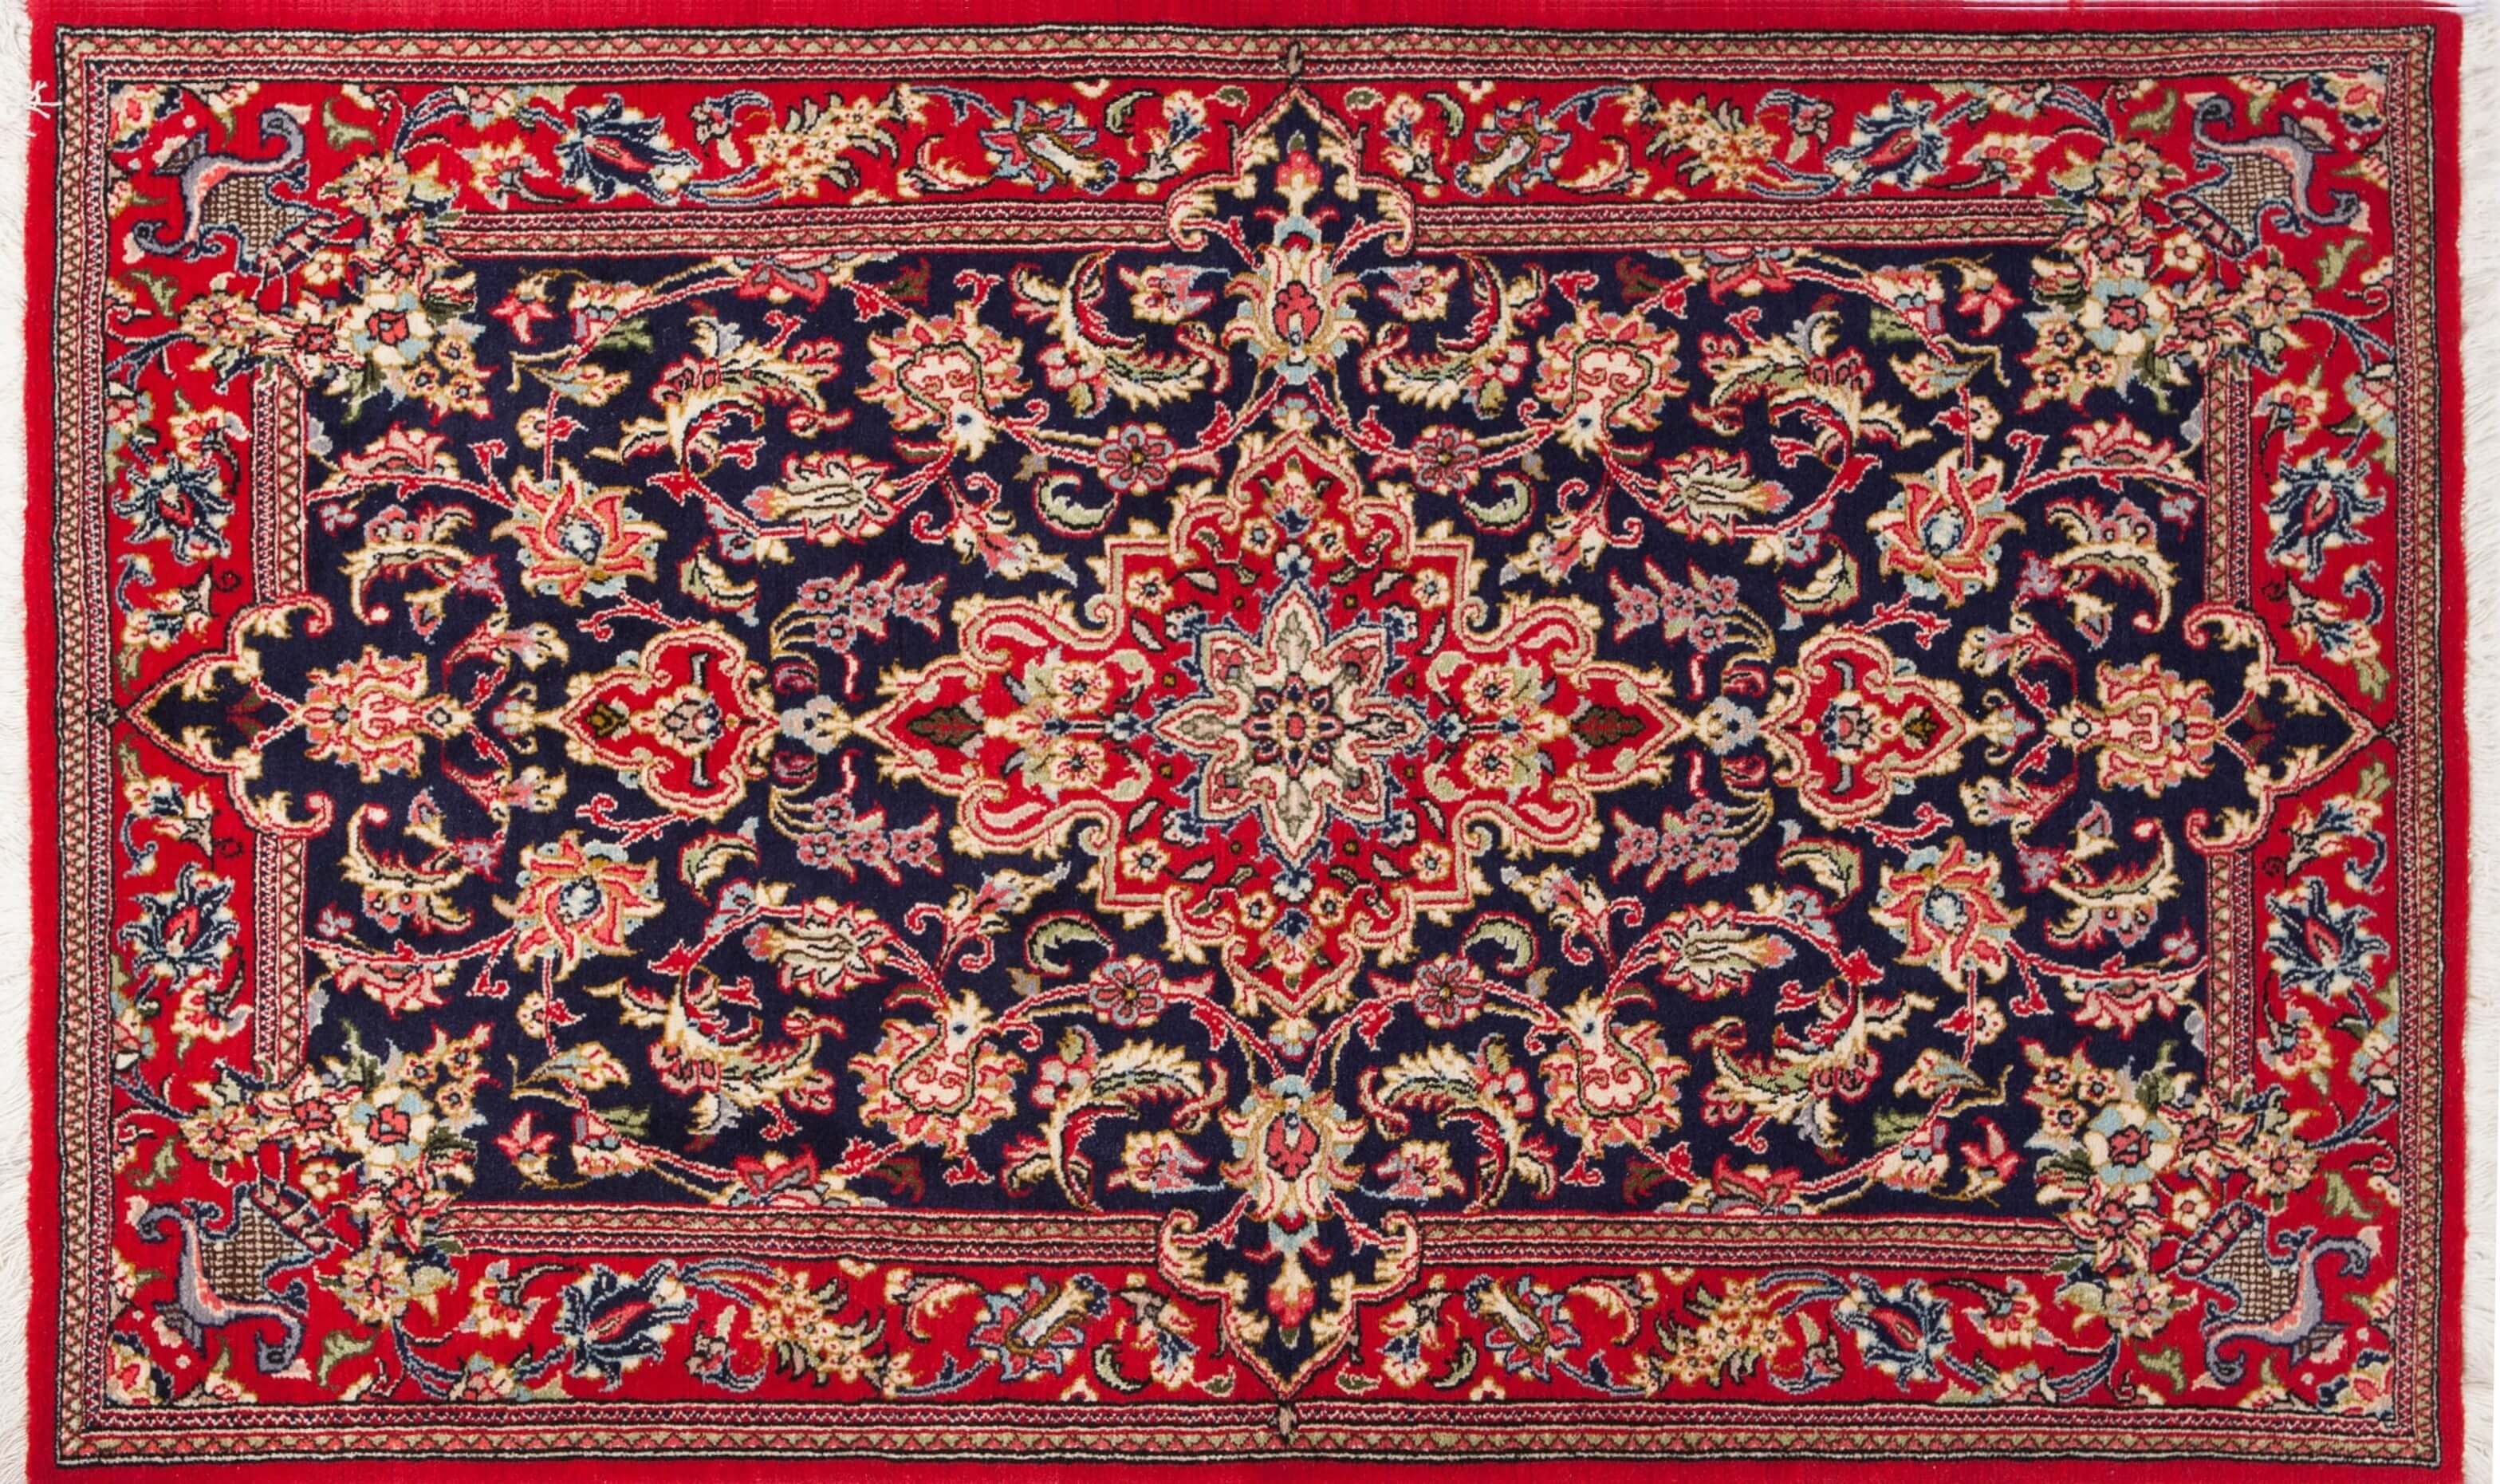 Persian Carpet photo - 7